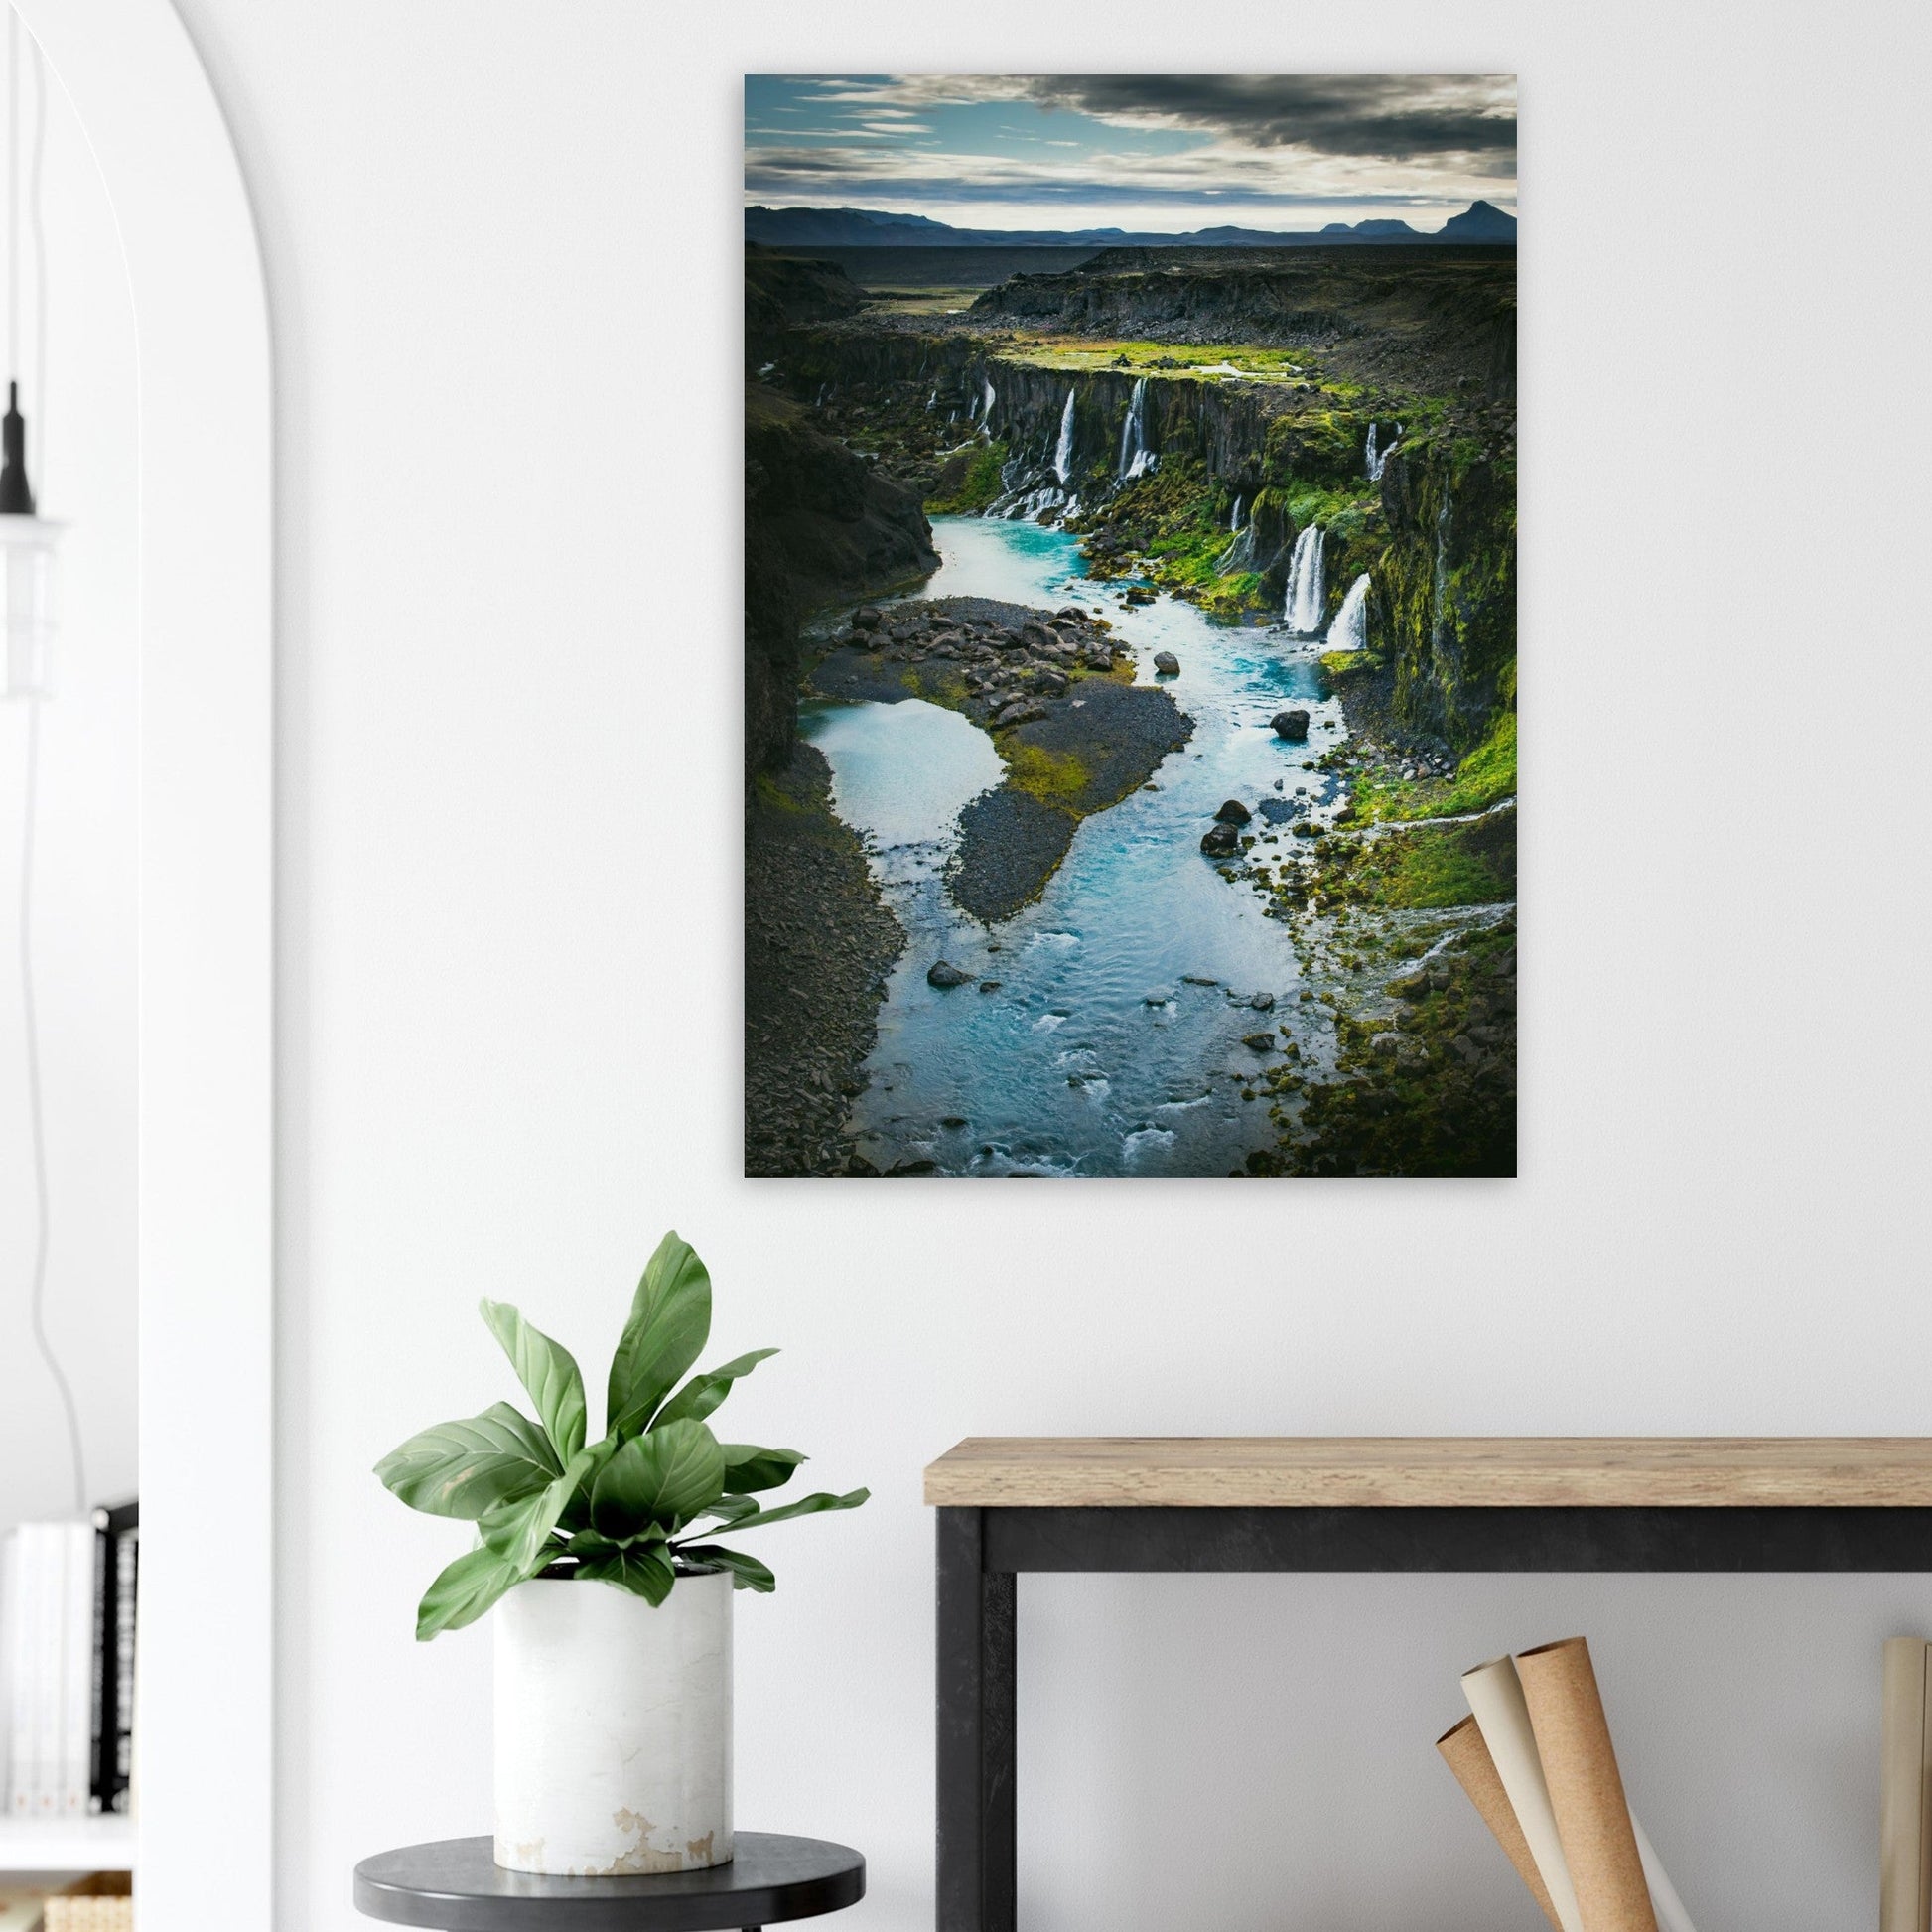 Photo de cascades en Islande - Tableau photo alu montagne